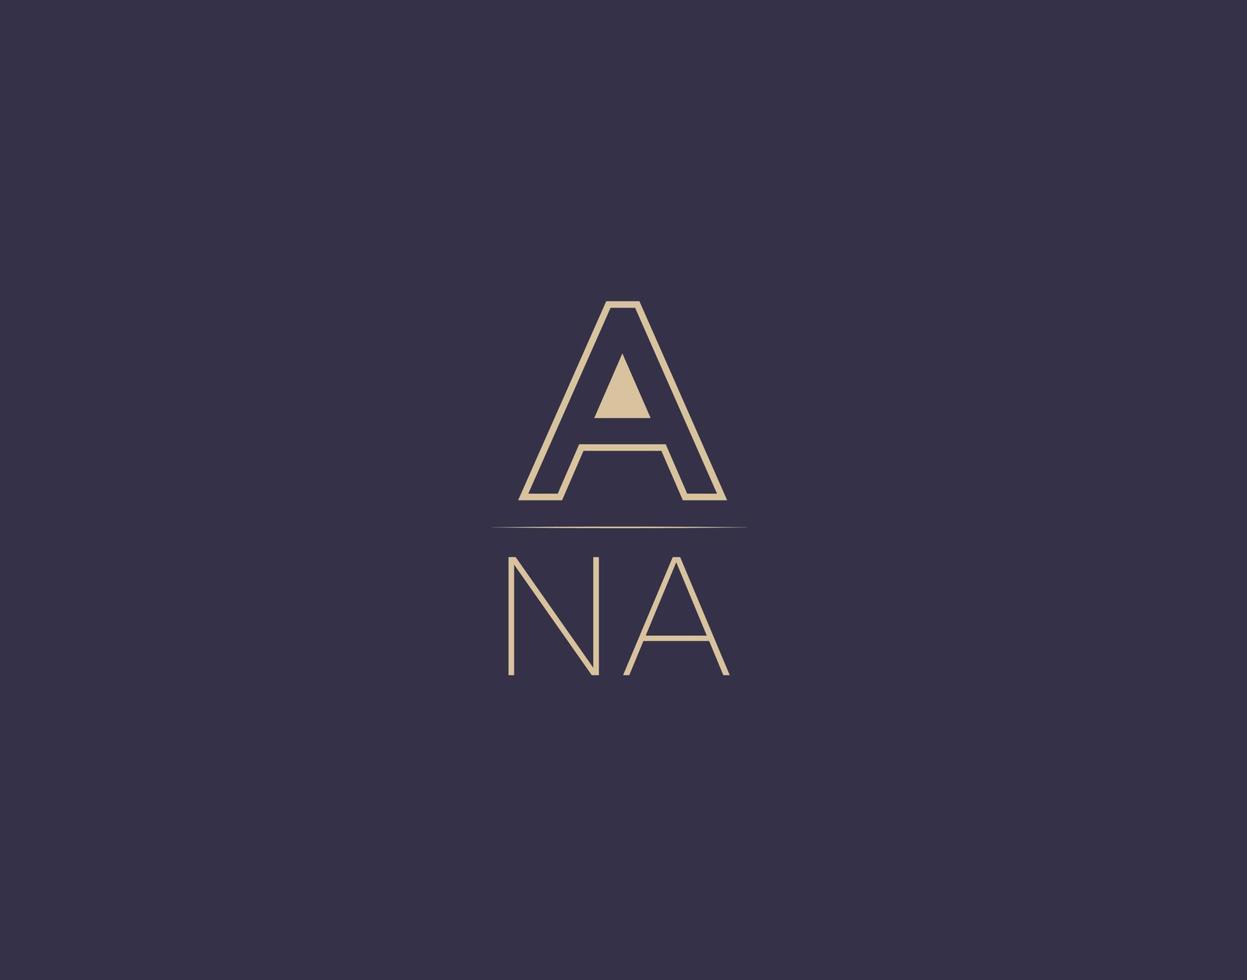 ANA letter logo design modern minimalist vector images